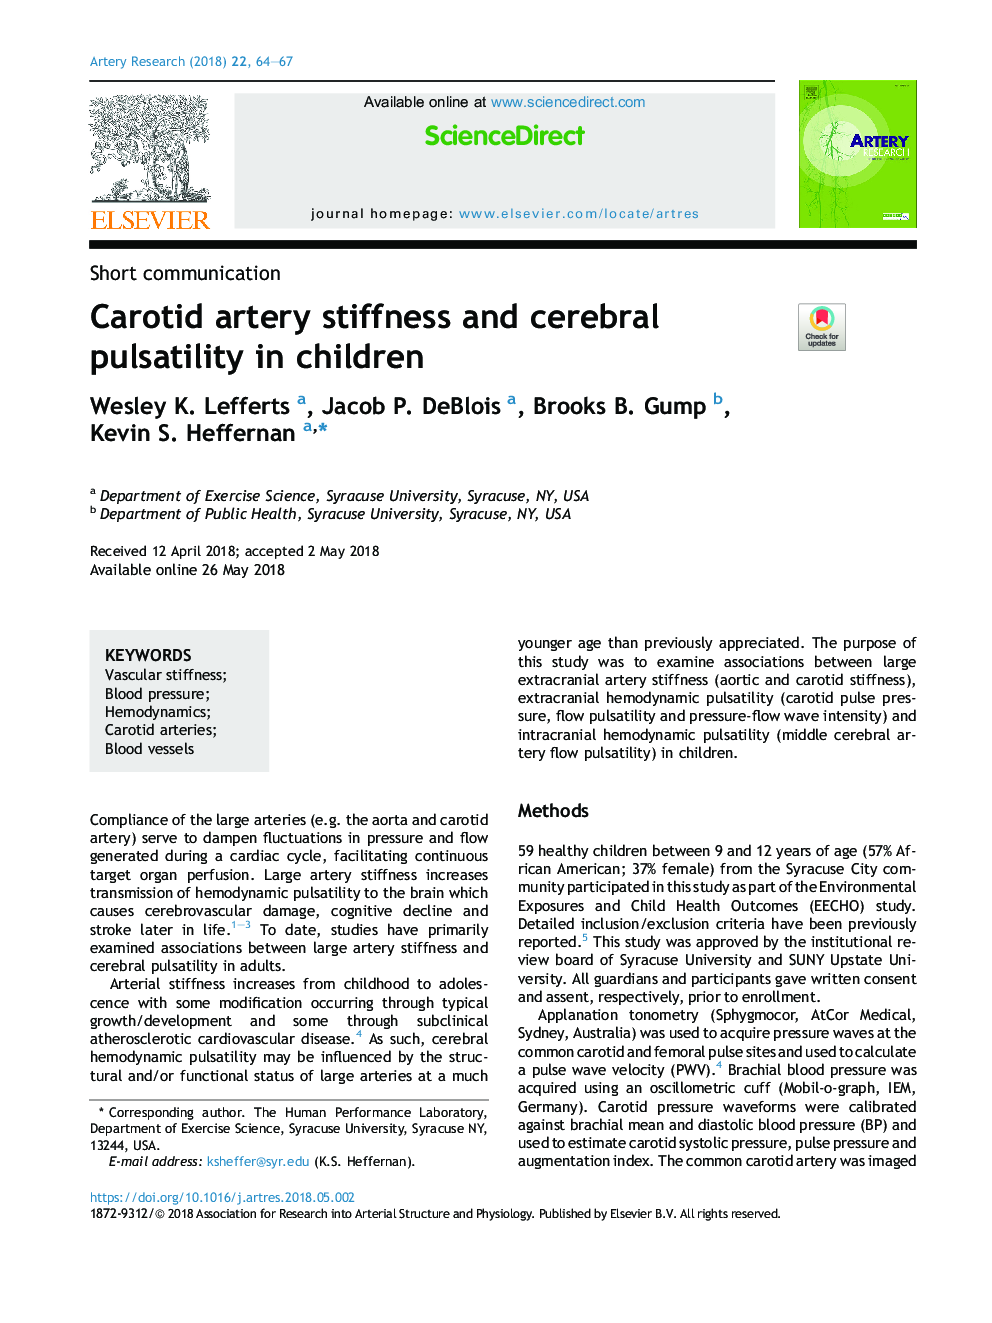 Carotid artery stiffness and cerebral pulsatility in children